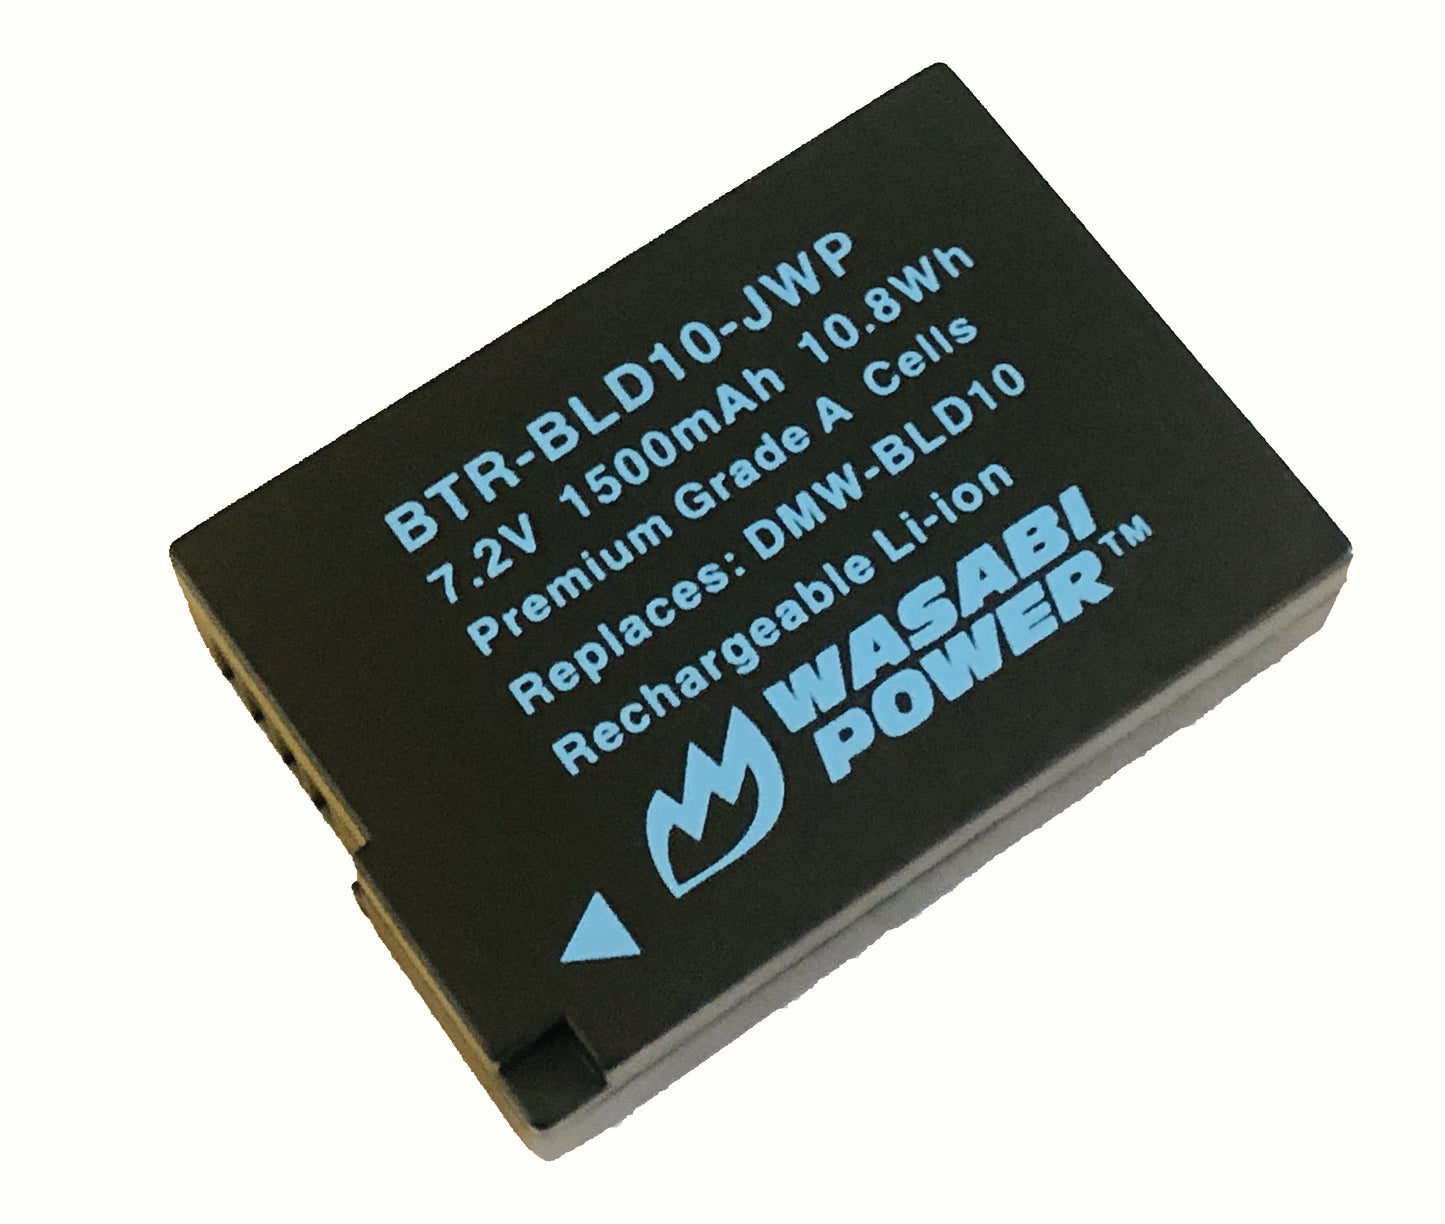 Wasabi Power Battery for Panasonic DMW-BLD10, DMW-BLD10E, DMW-BLD10PP and Panasonic Lumix DMC-G3, DMC-GF2, DMC-GX1